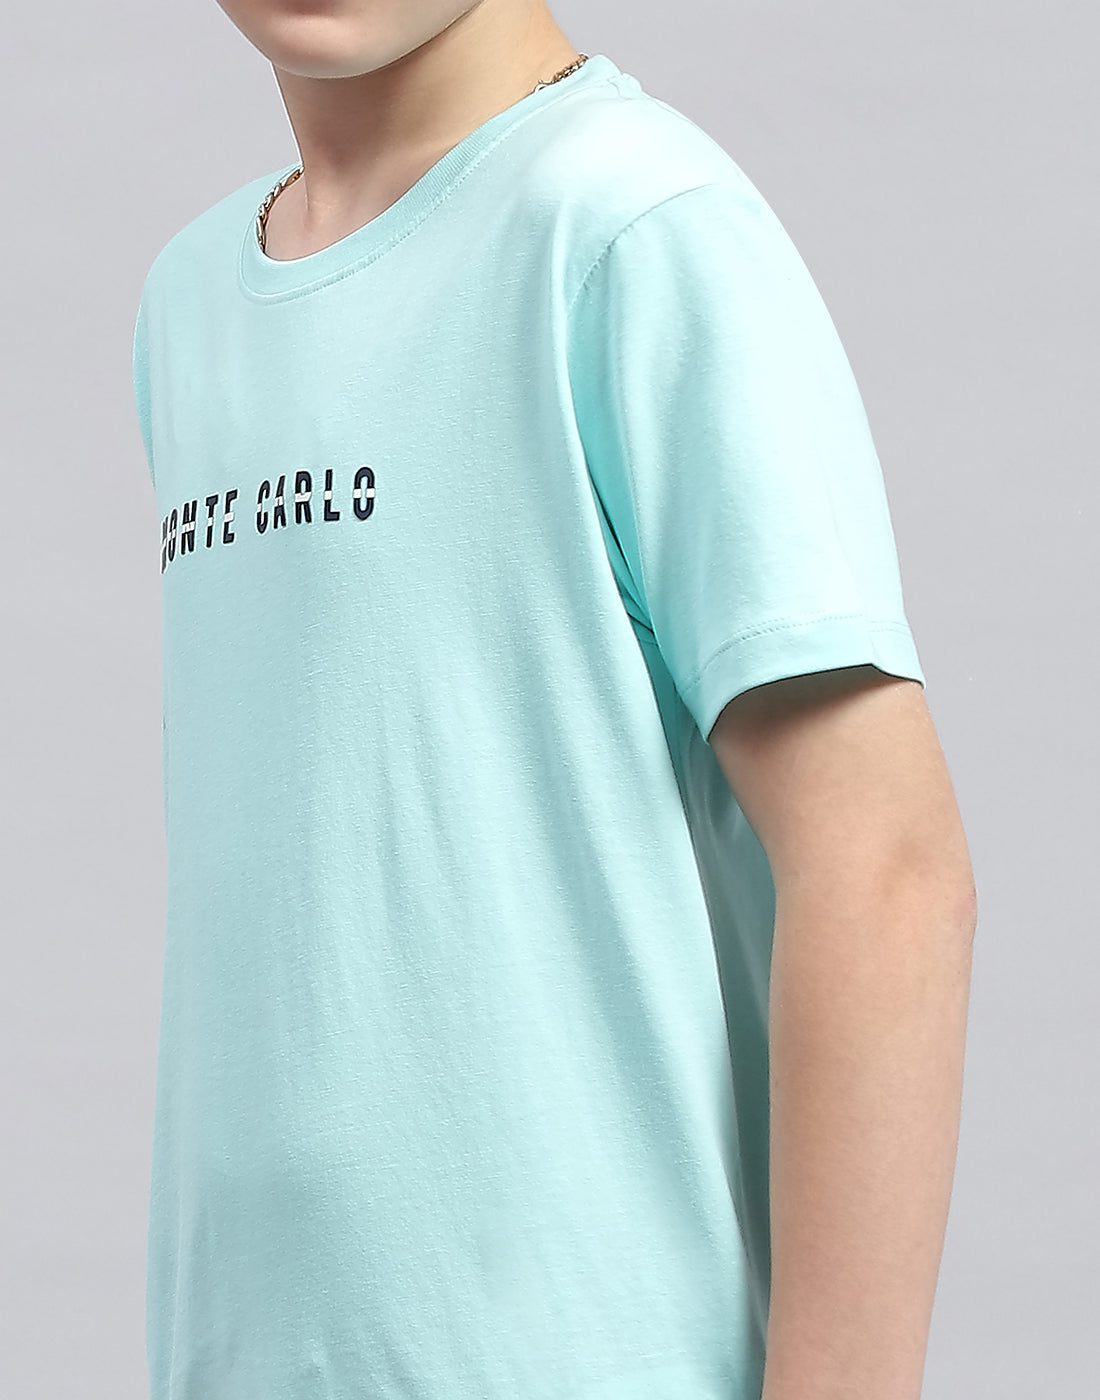 Boys Aqua Blue Printed Round Neck Half Sleeve T-Shirt